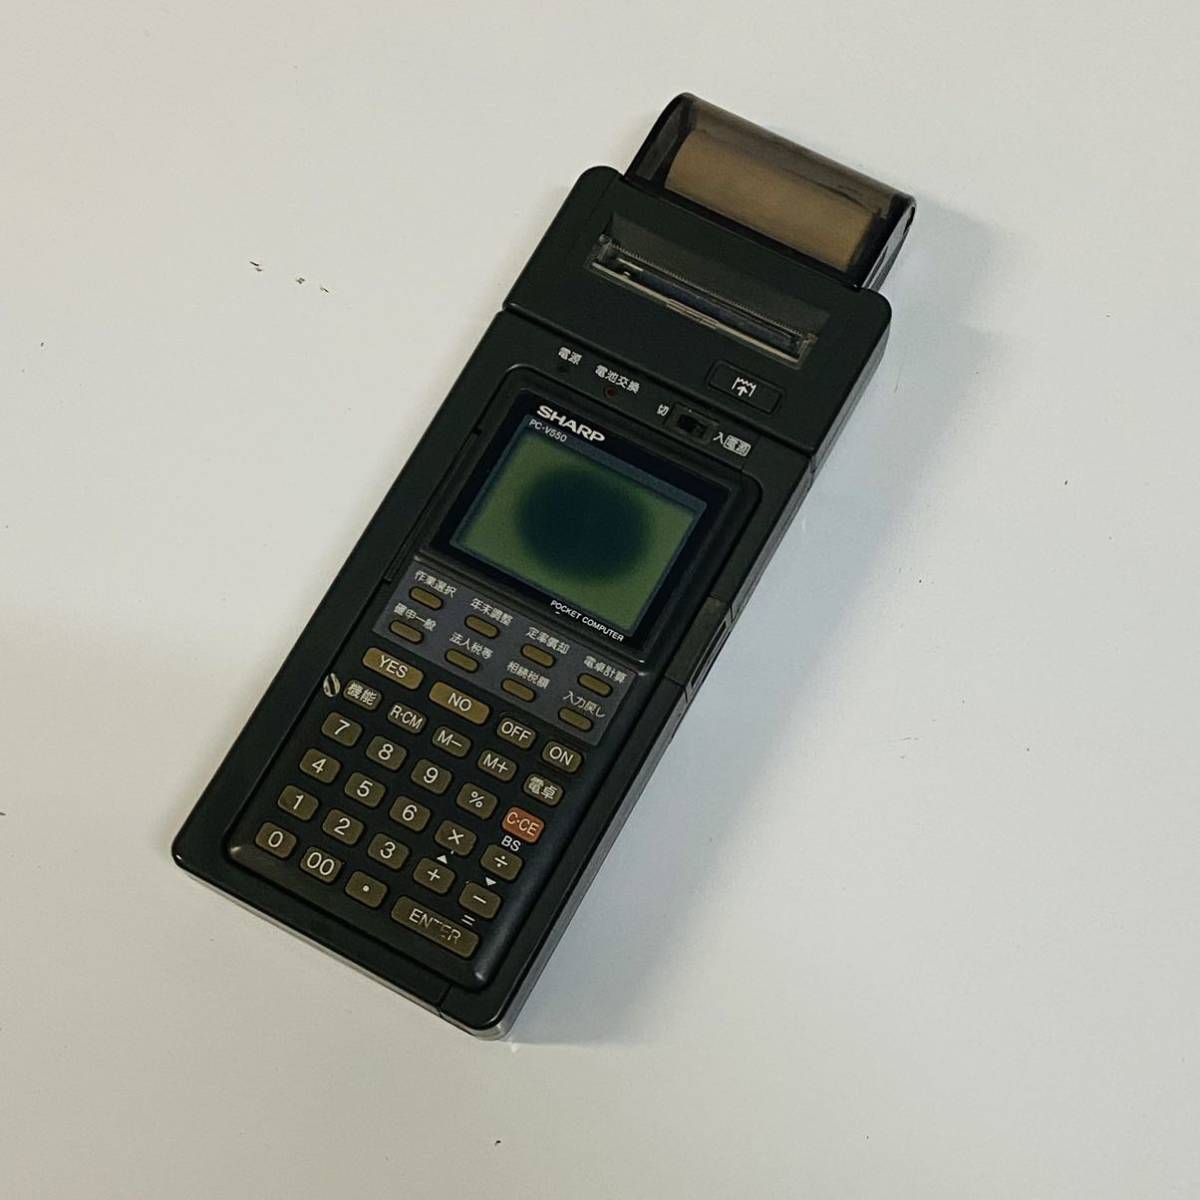  sharp pocket computer -PC-V550 secondhand goods 